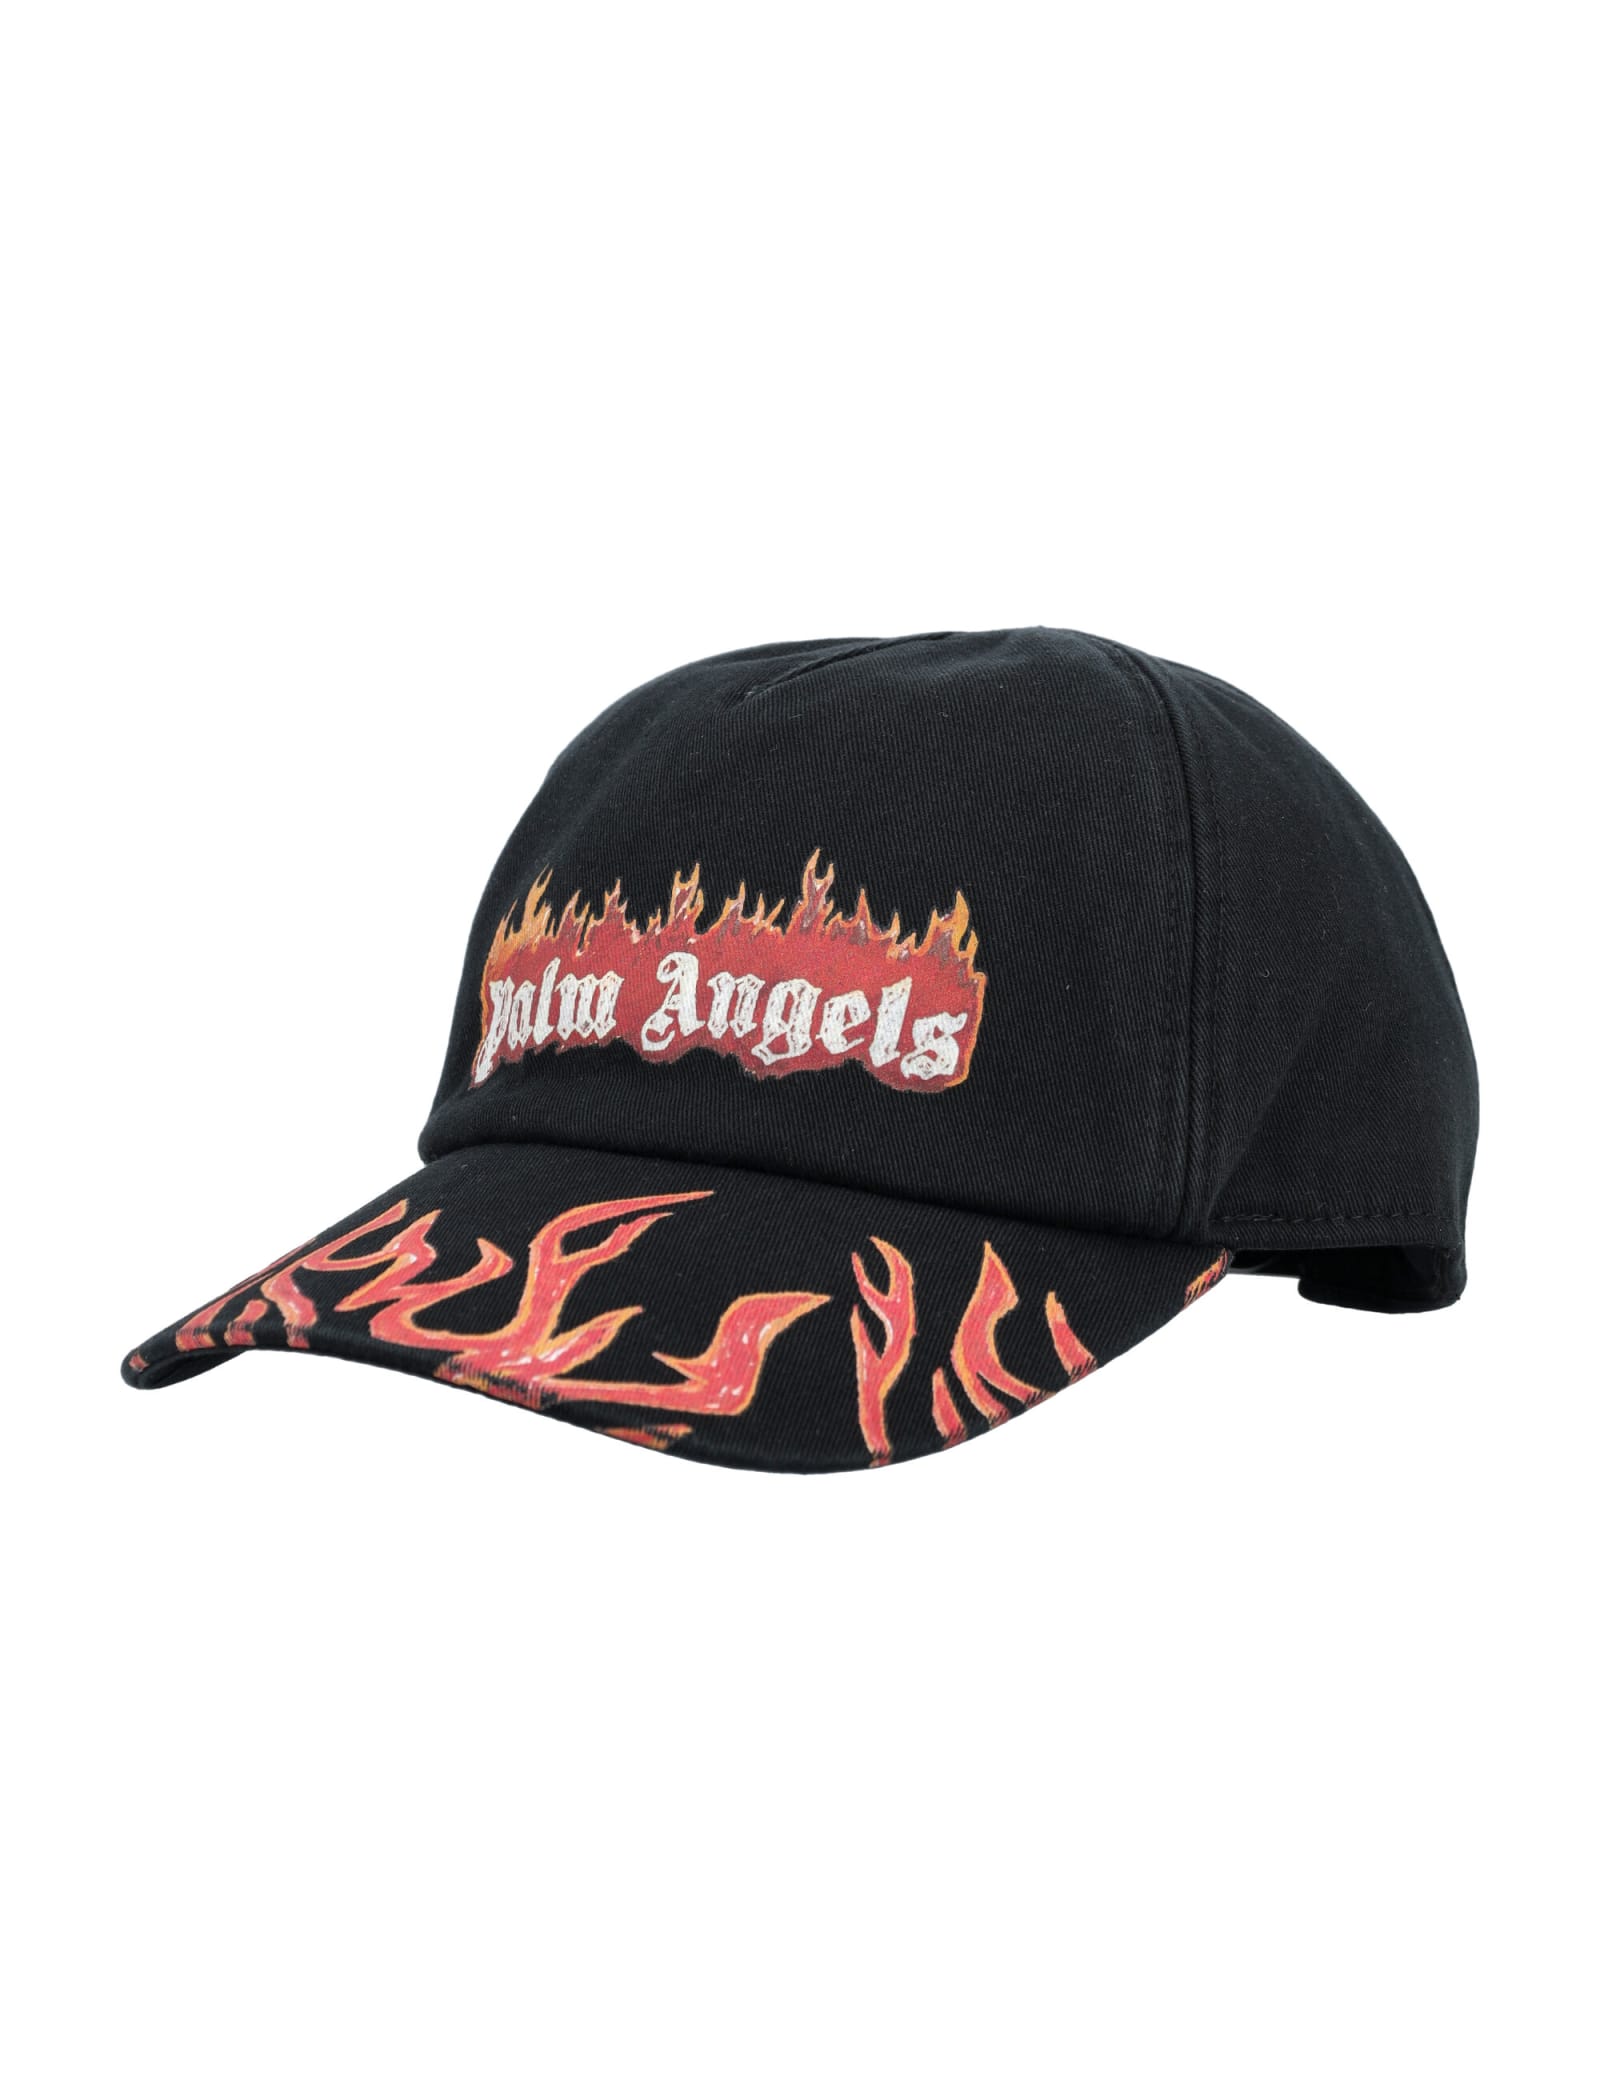 PALM ANGELS BURNING LOGO BASEBALL CAP